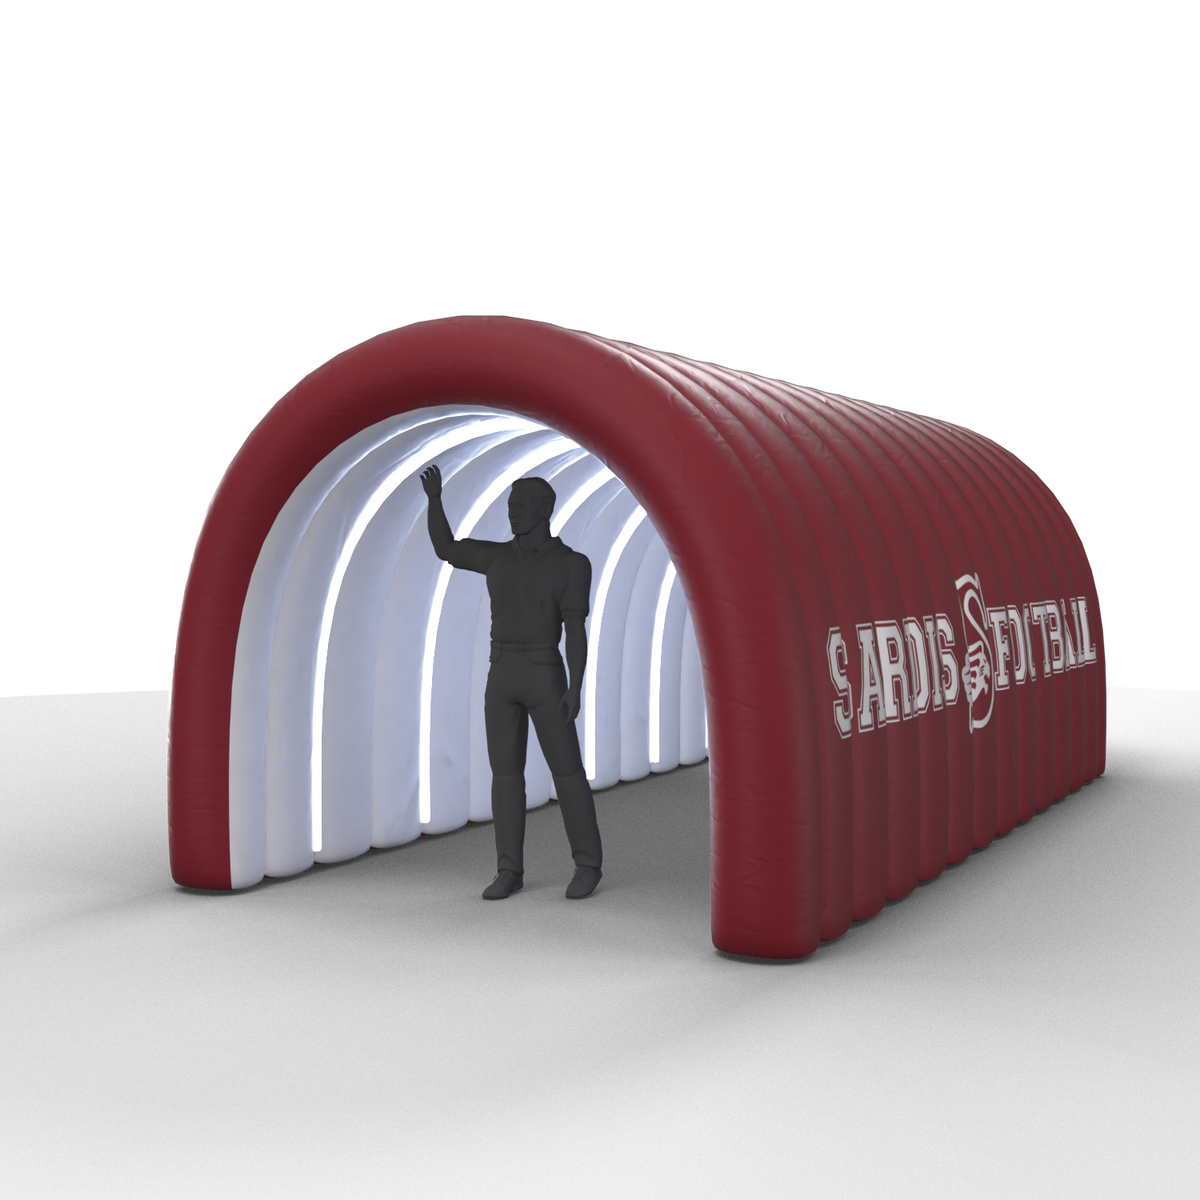 sardis tunnel inflatable